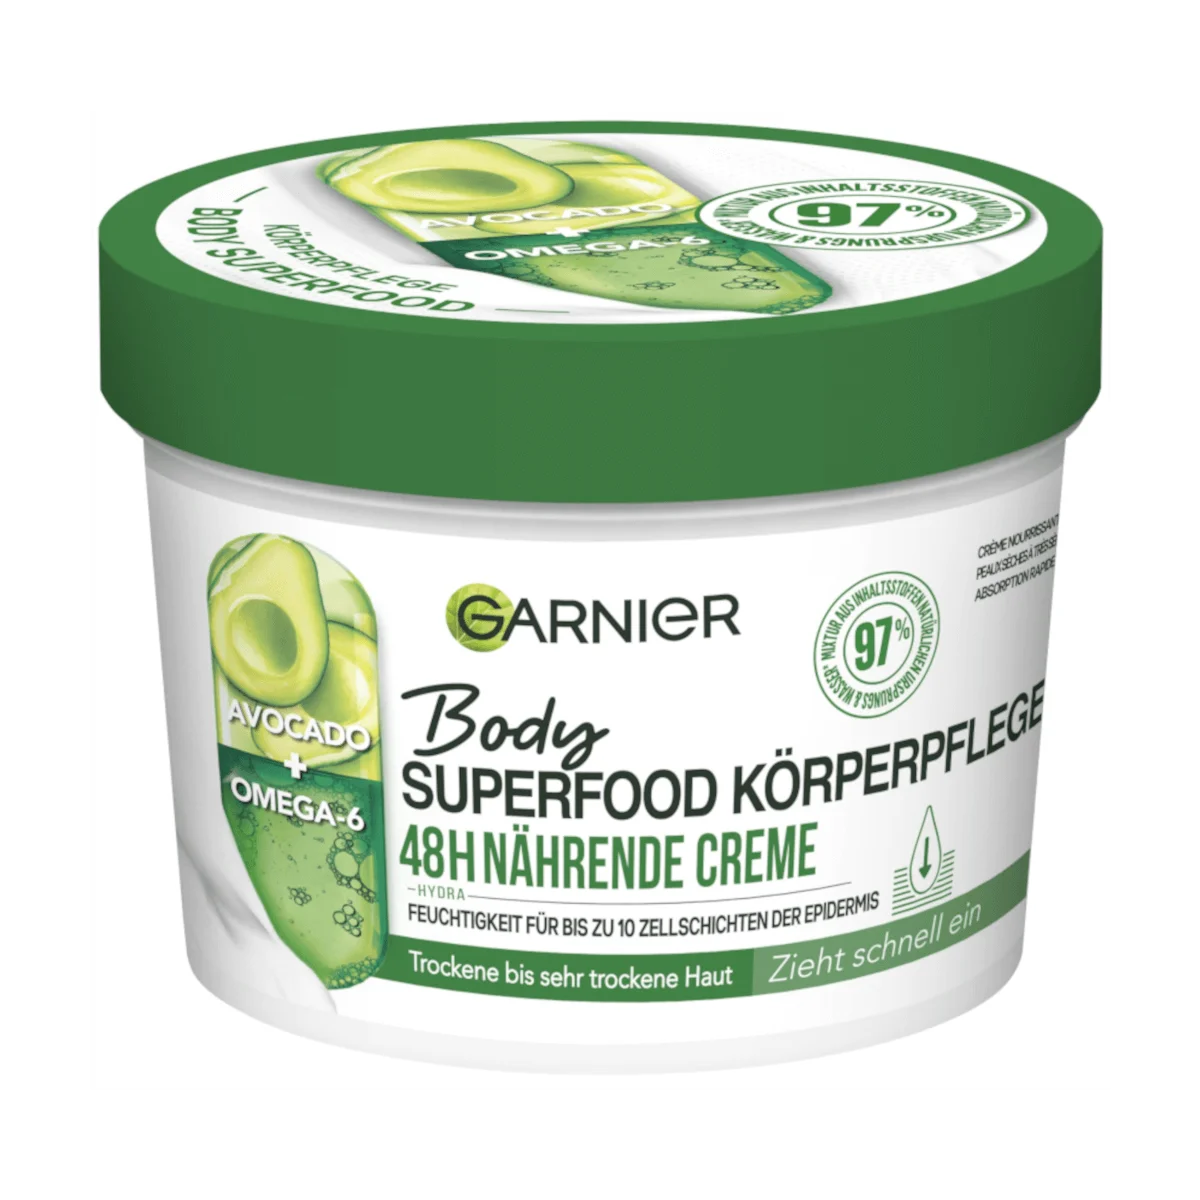 Garnier Body Superfood Körperpflege Avocado, 380 ml